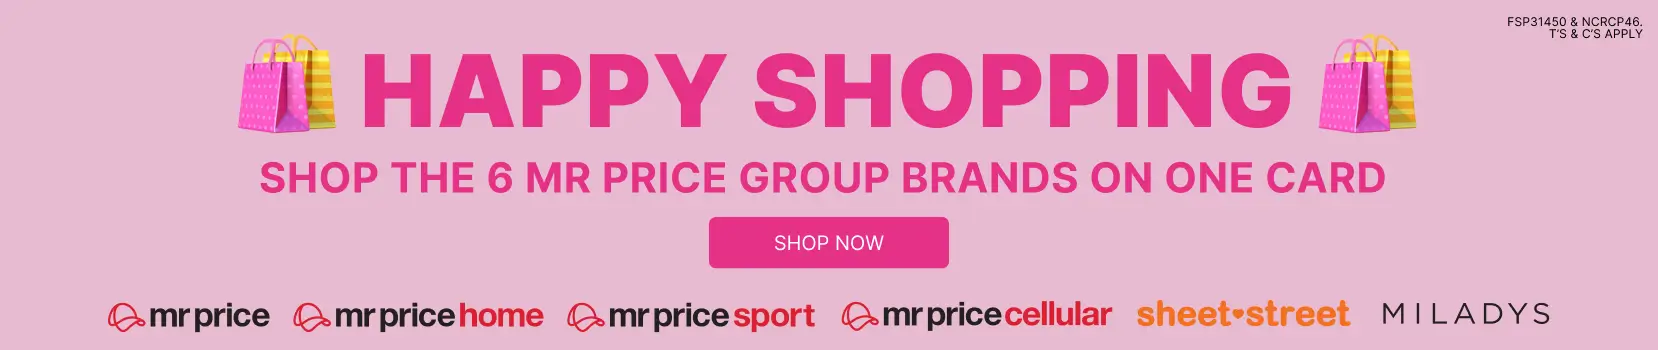 Shop 6 Mr Price Brands